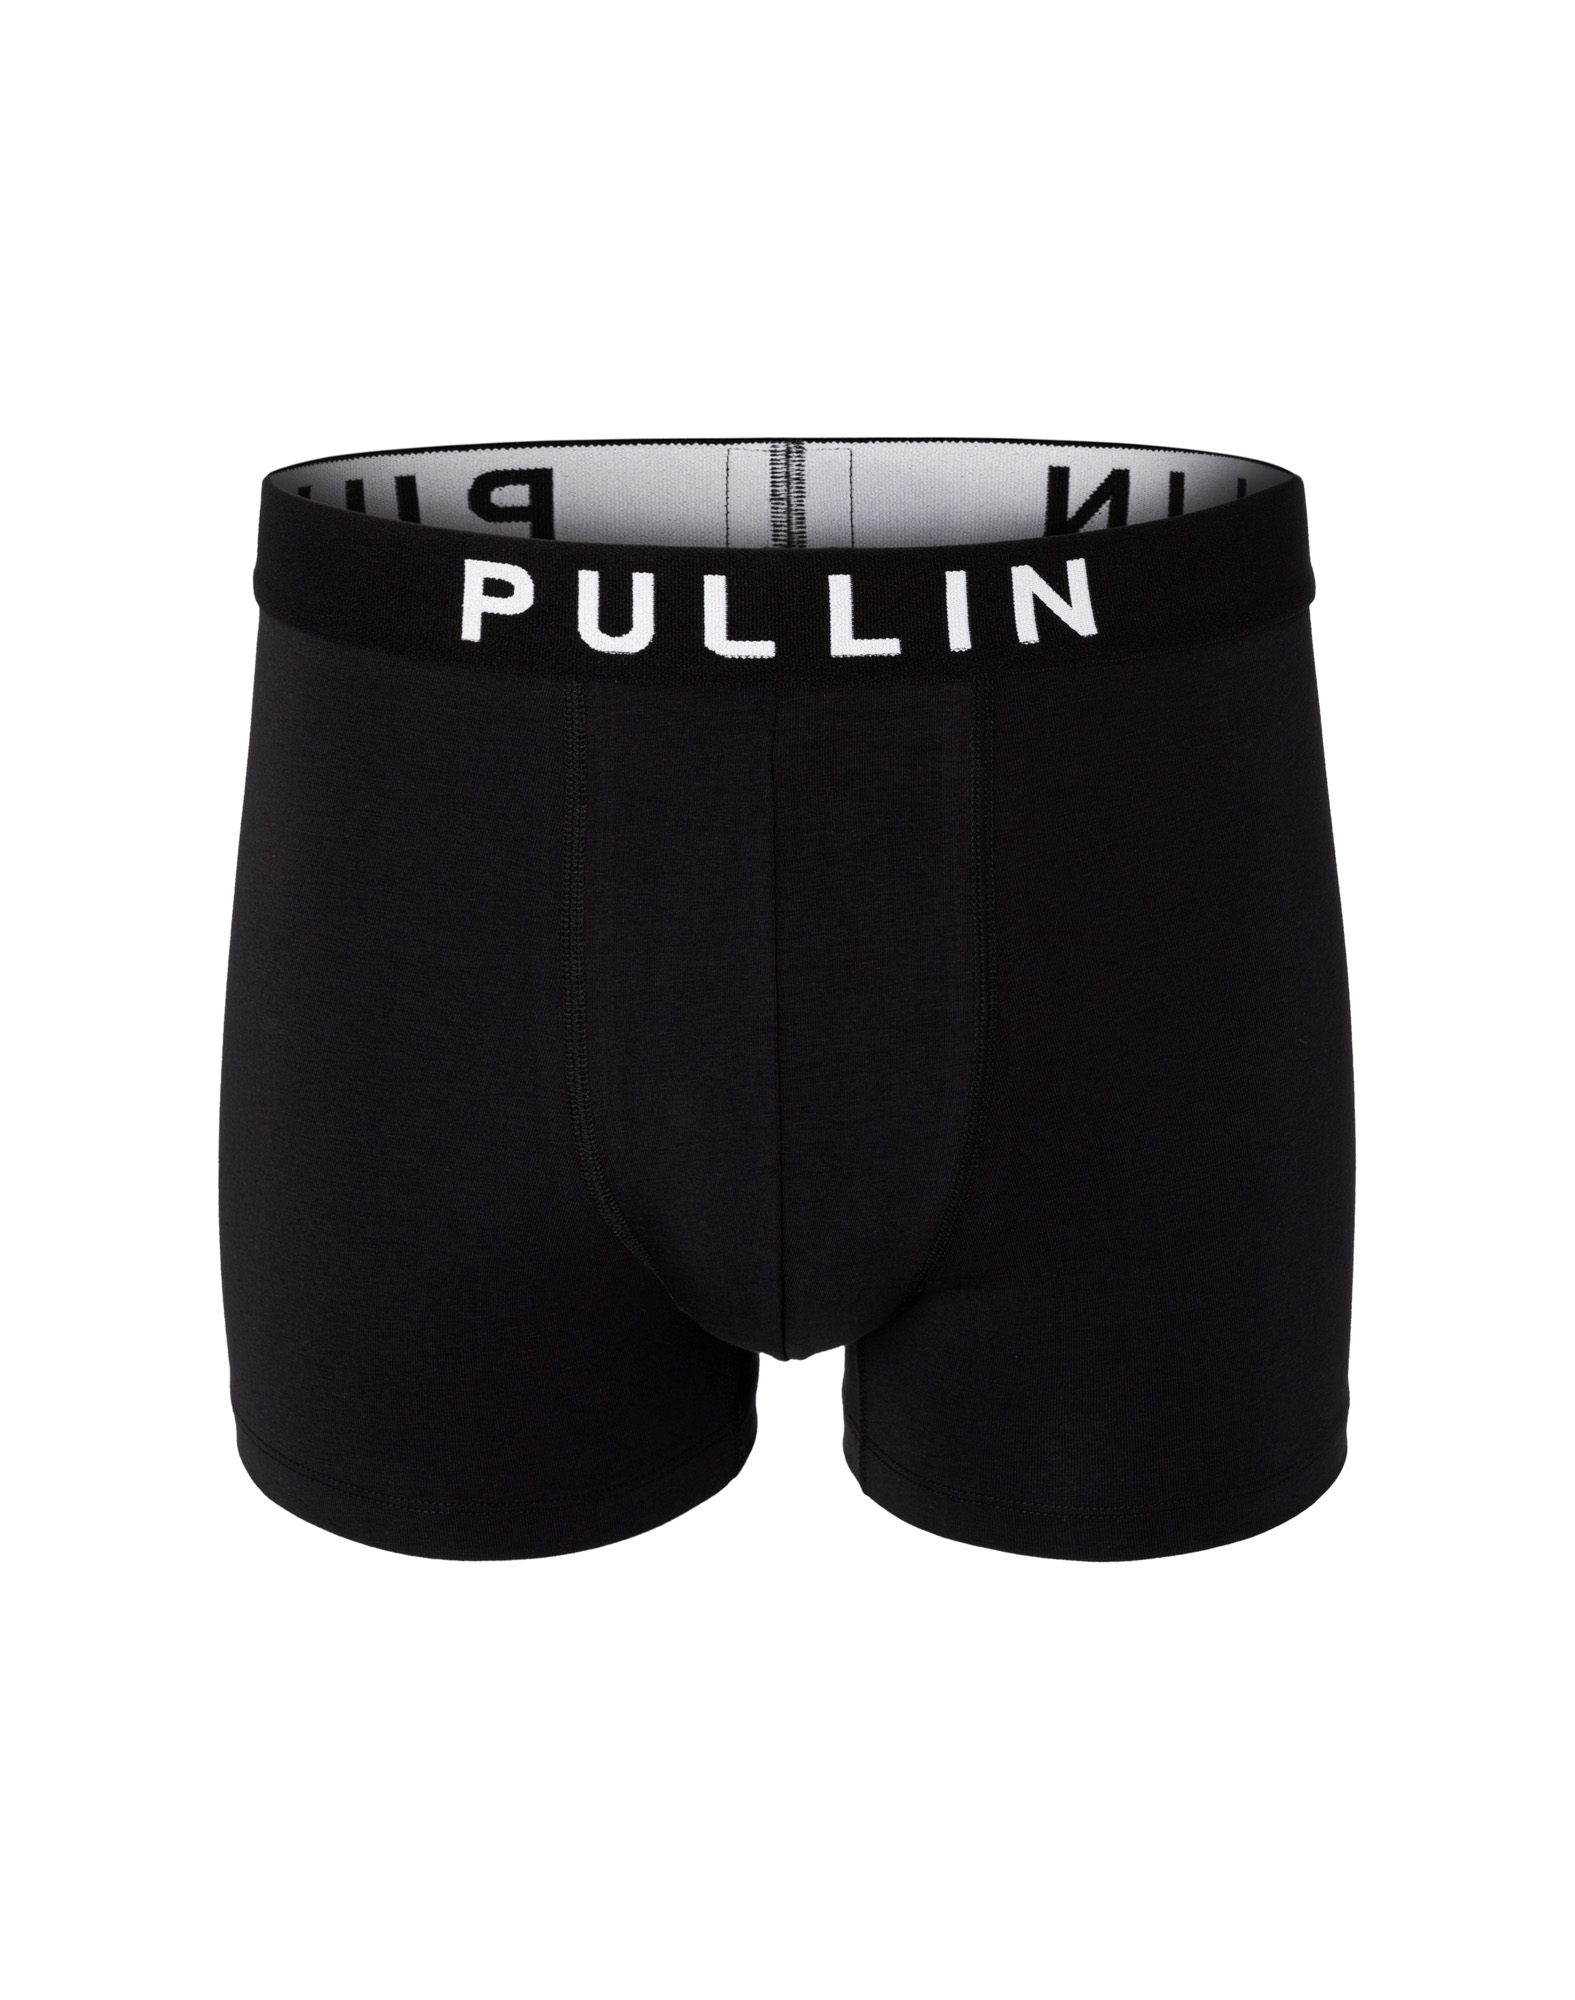 BLACK MEN'S TRUNK MASTER COTON BLACK21 - Men's underwear PULLIN